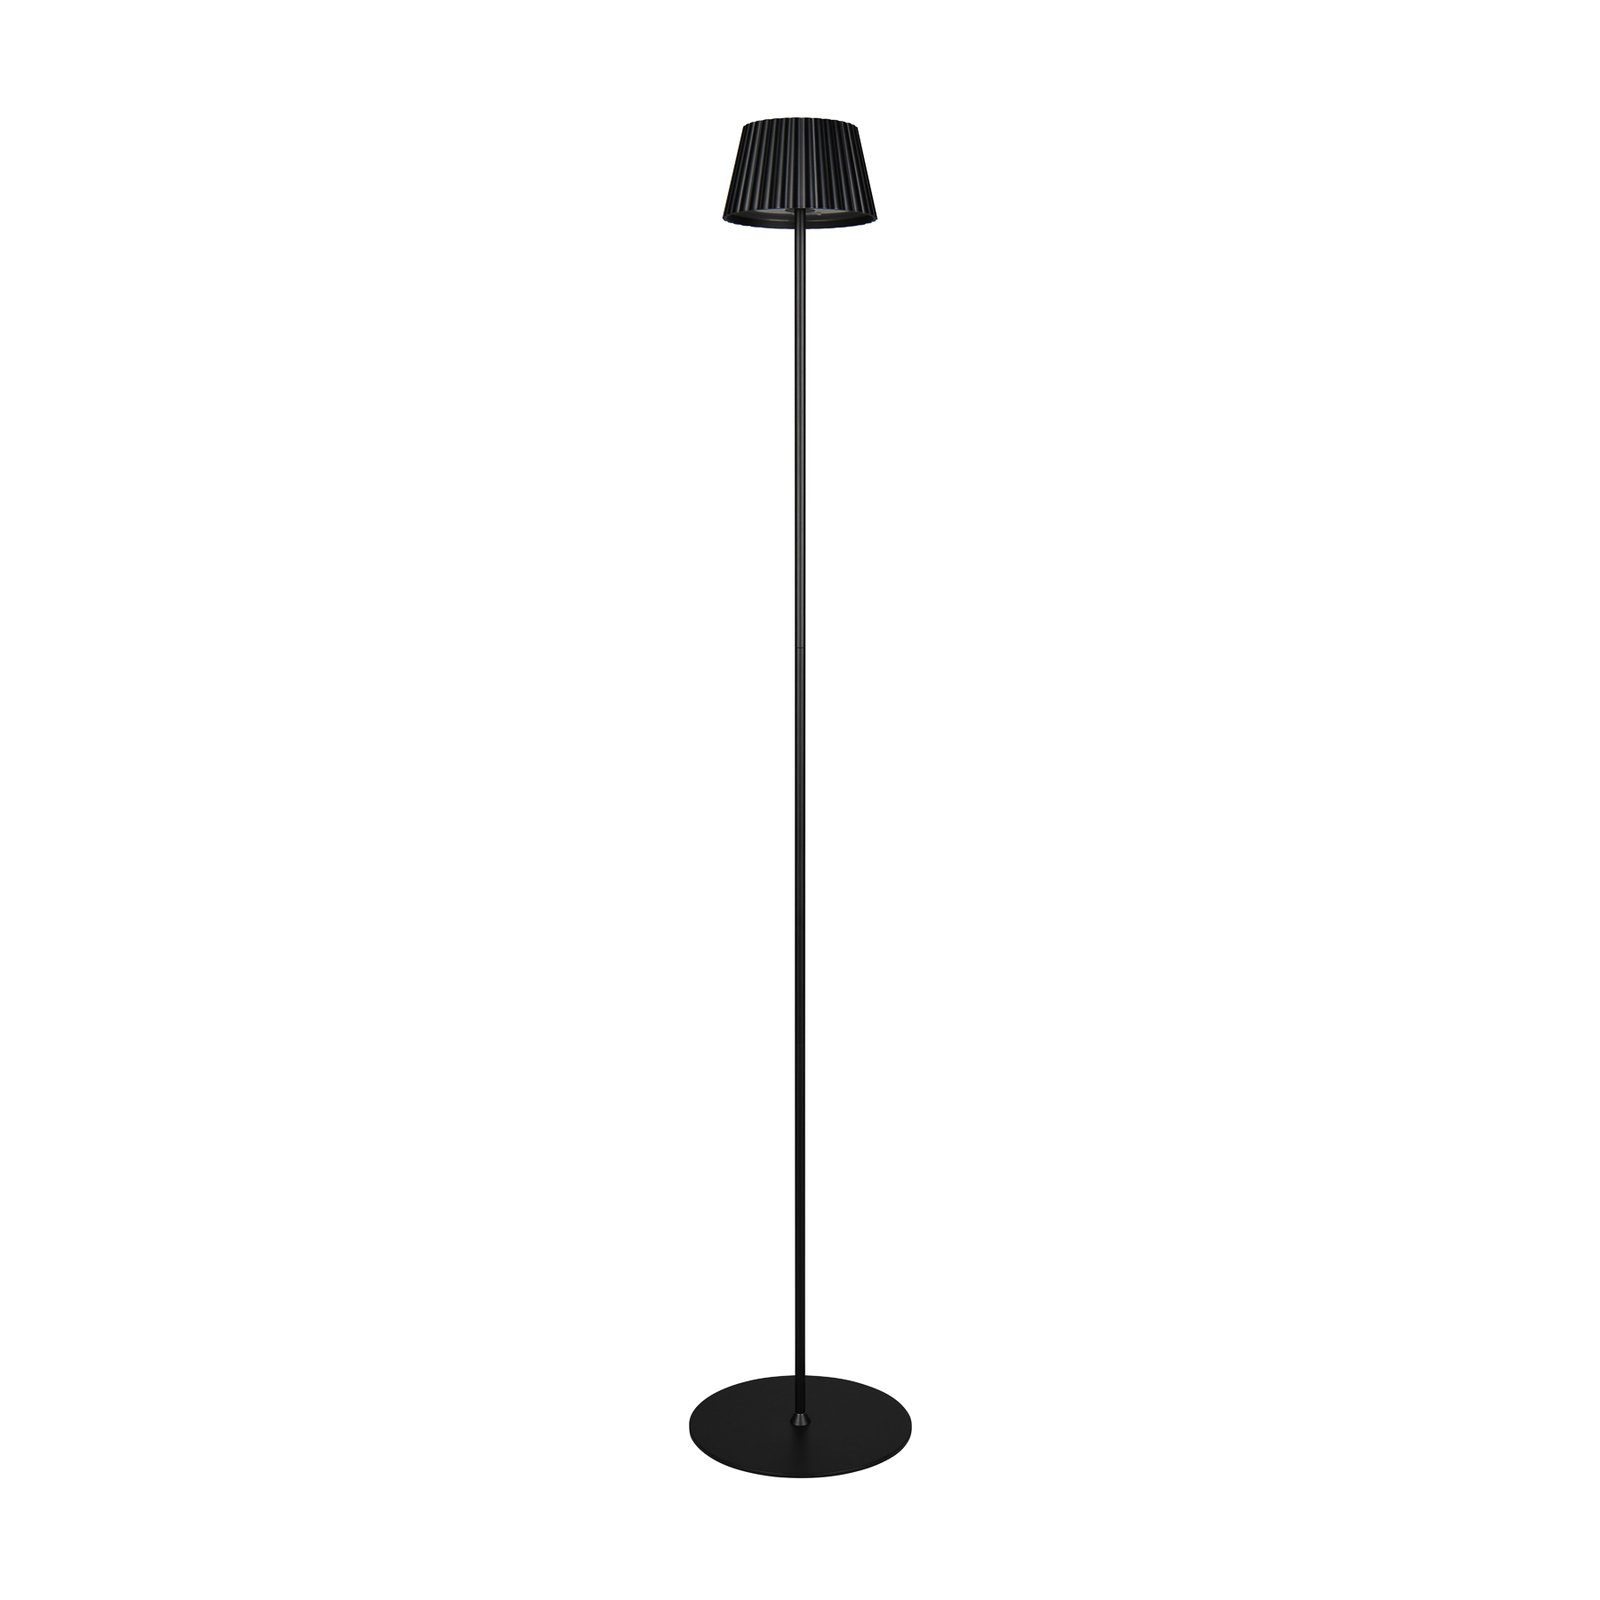 Suarez LED oppladbar gulvlampe, svart, høyde 123 cm, metall